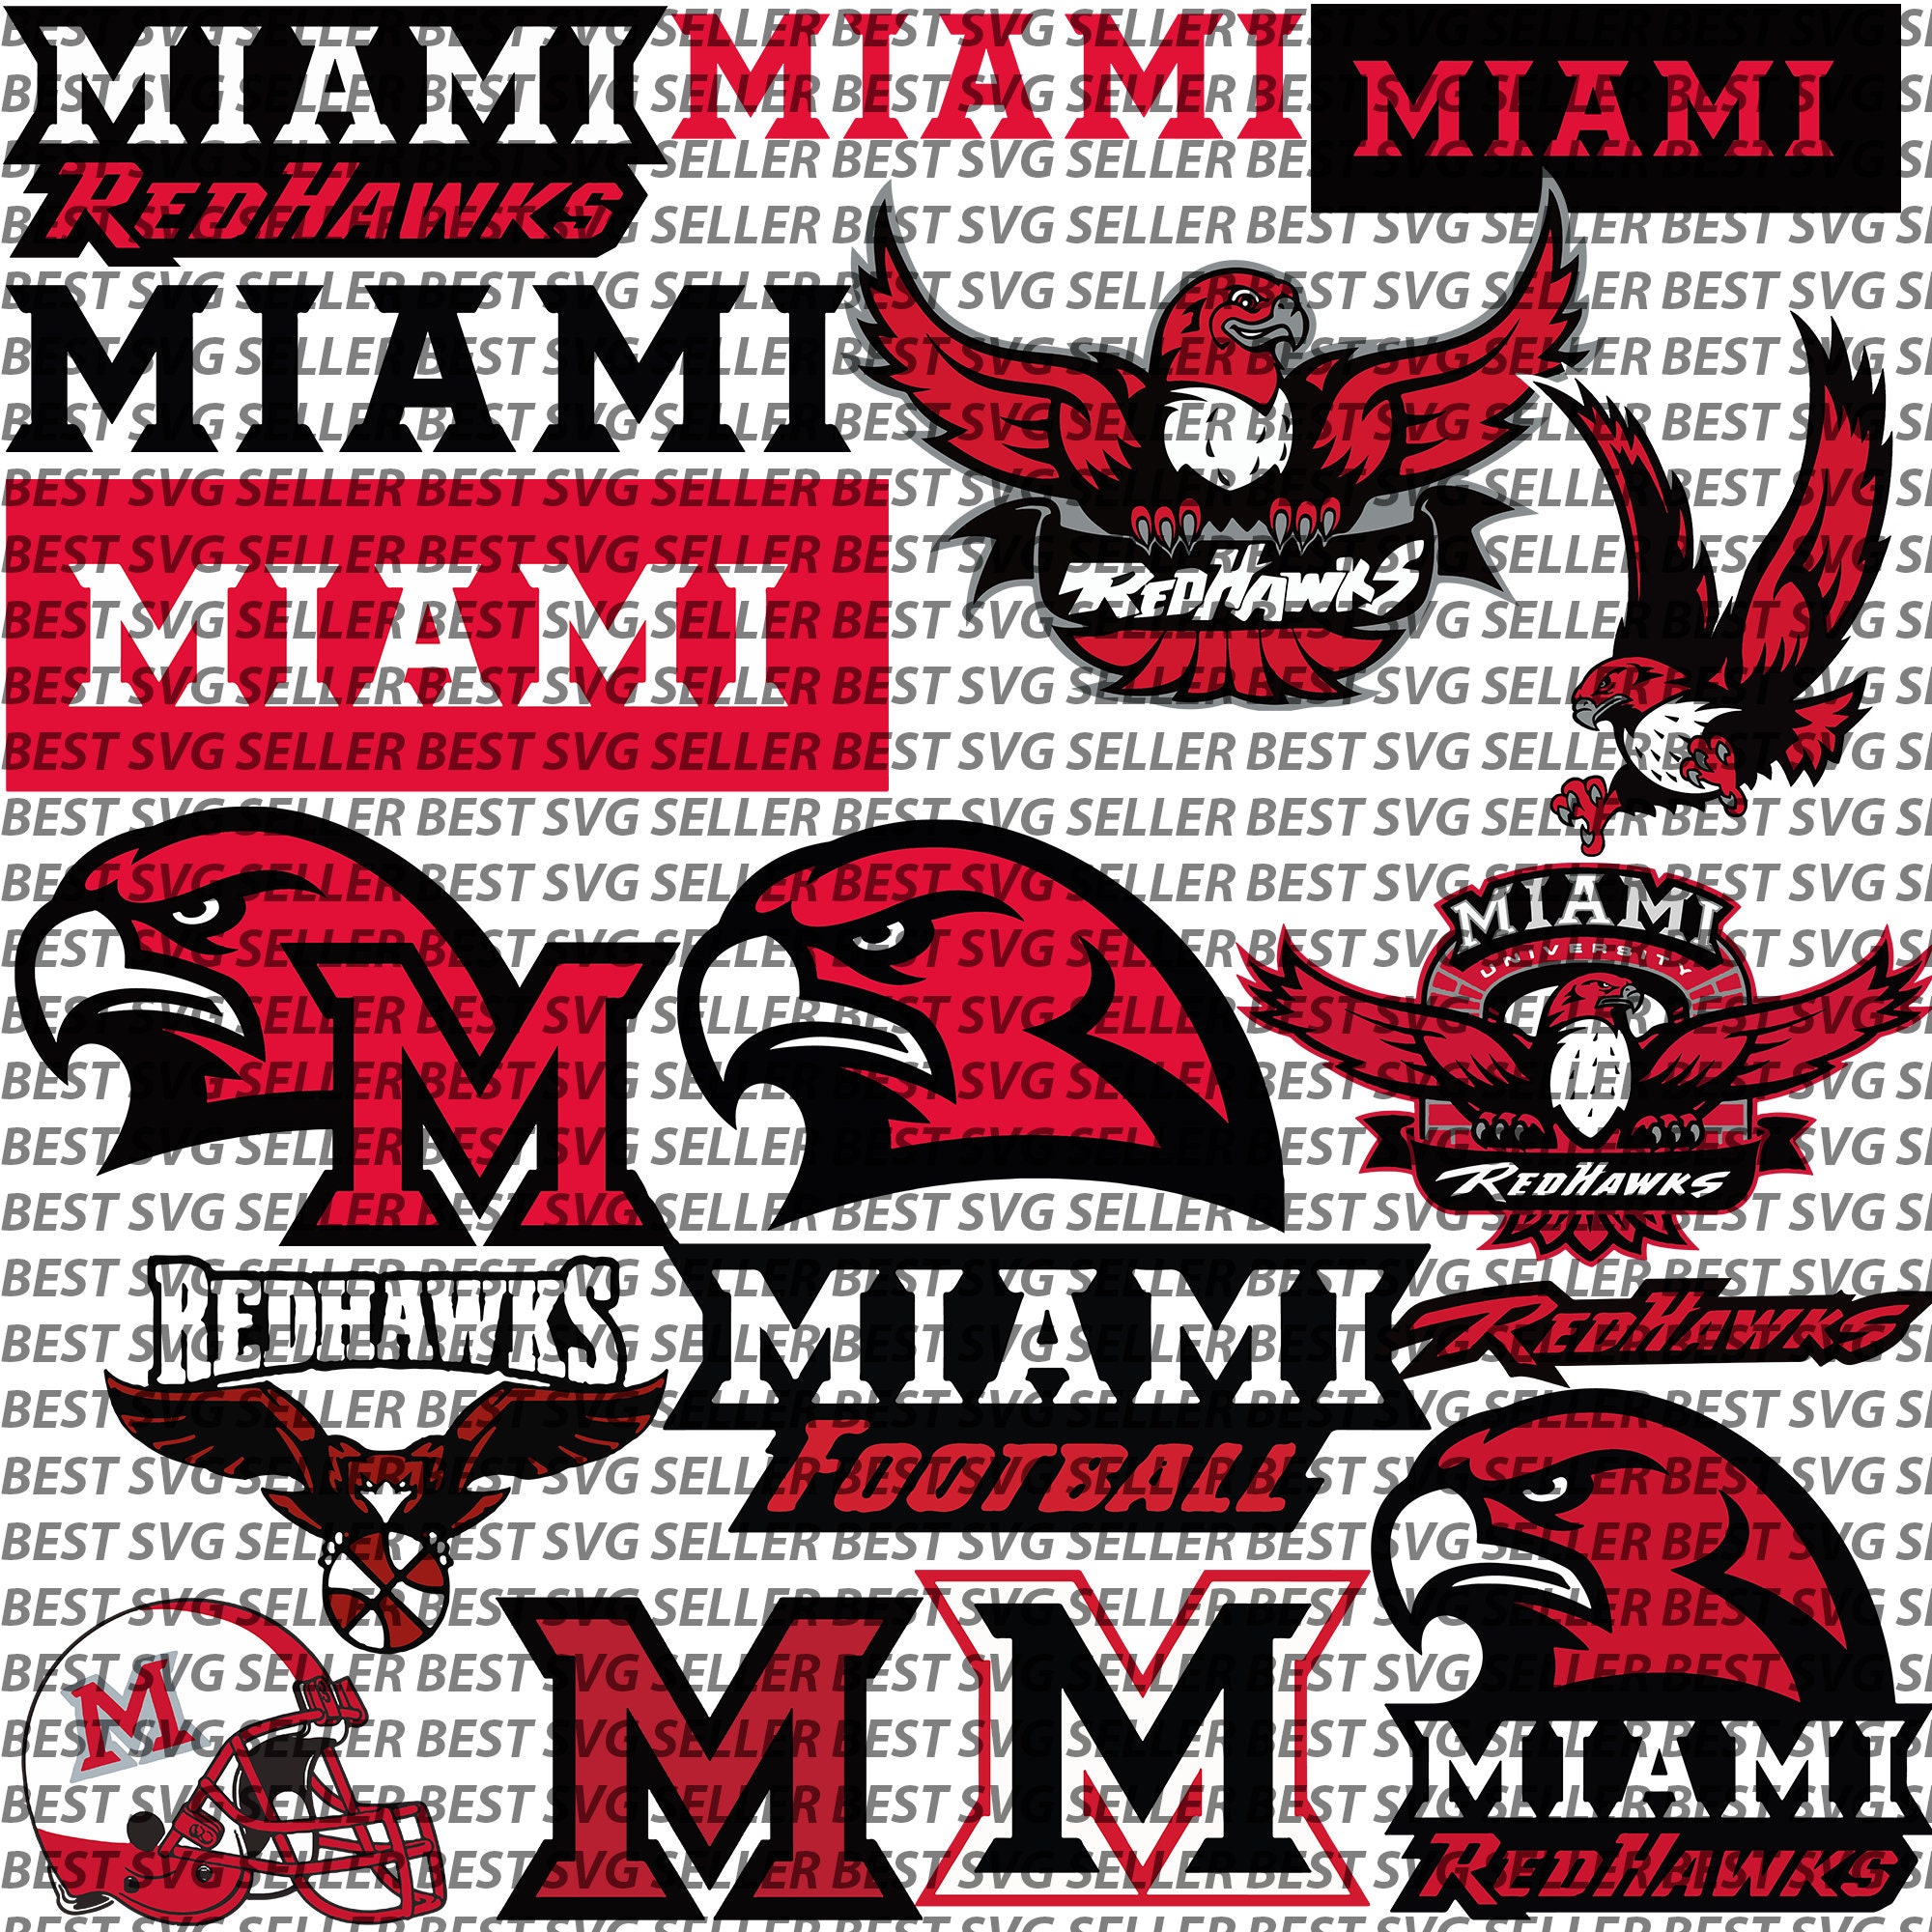 Miami Ties FSU 2-2 to Open Season - Miami University RedHawks